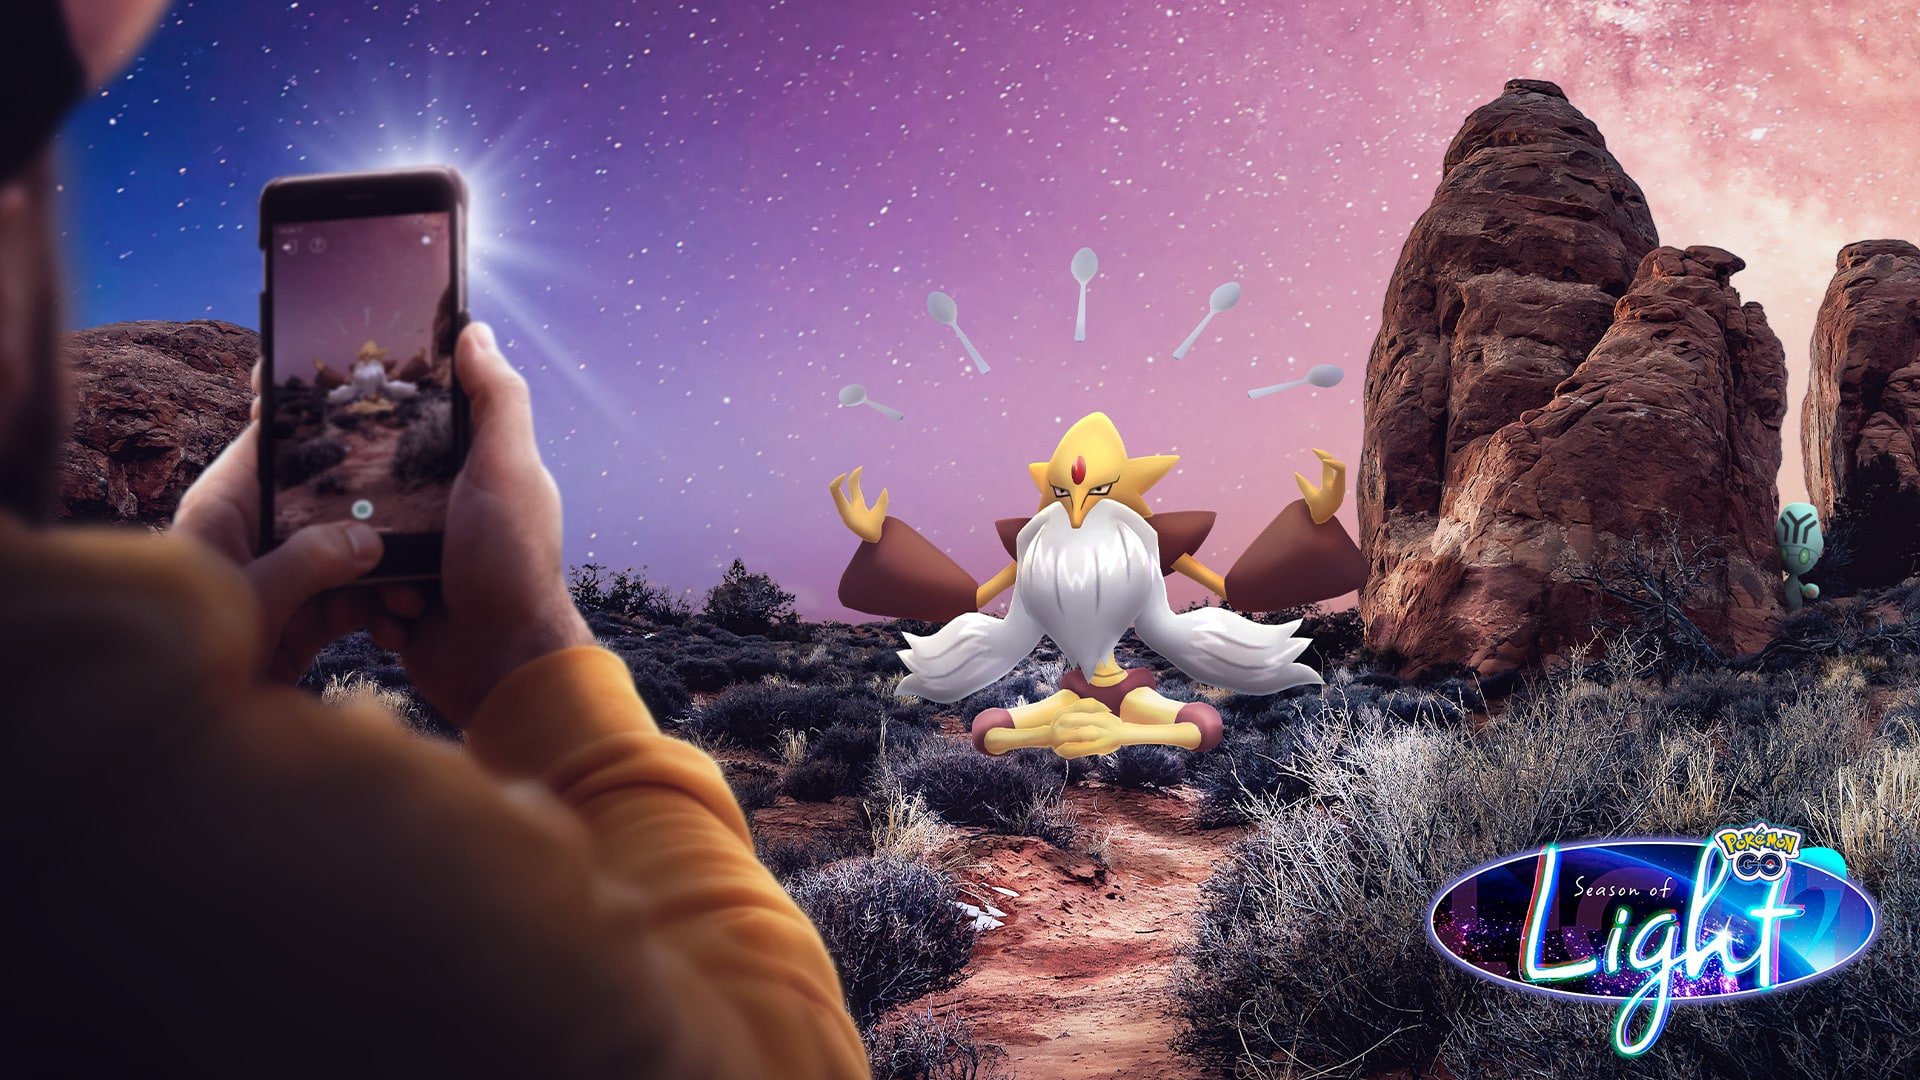 The Four Formes Of Deoxys: Pokémon GO Spotlight